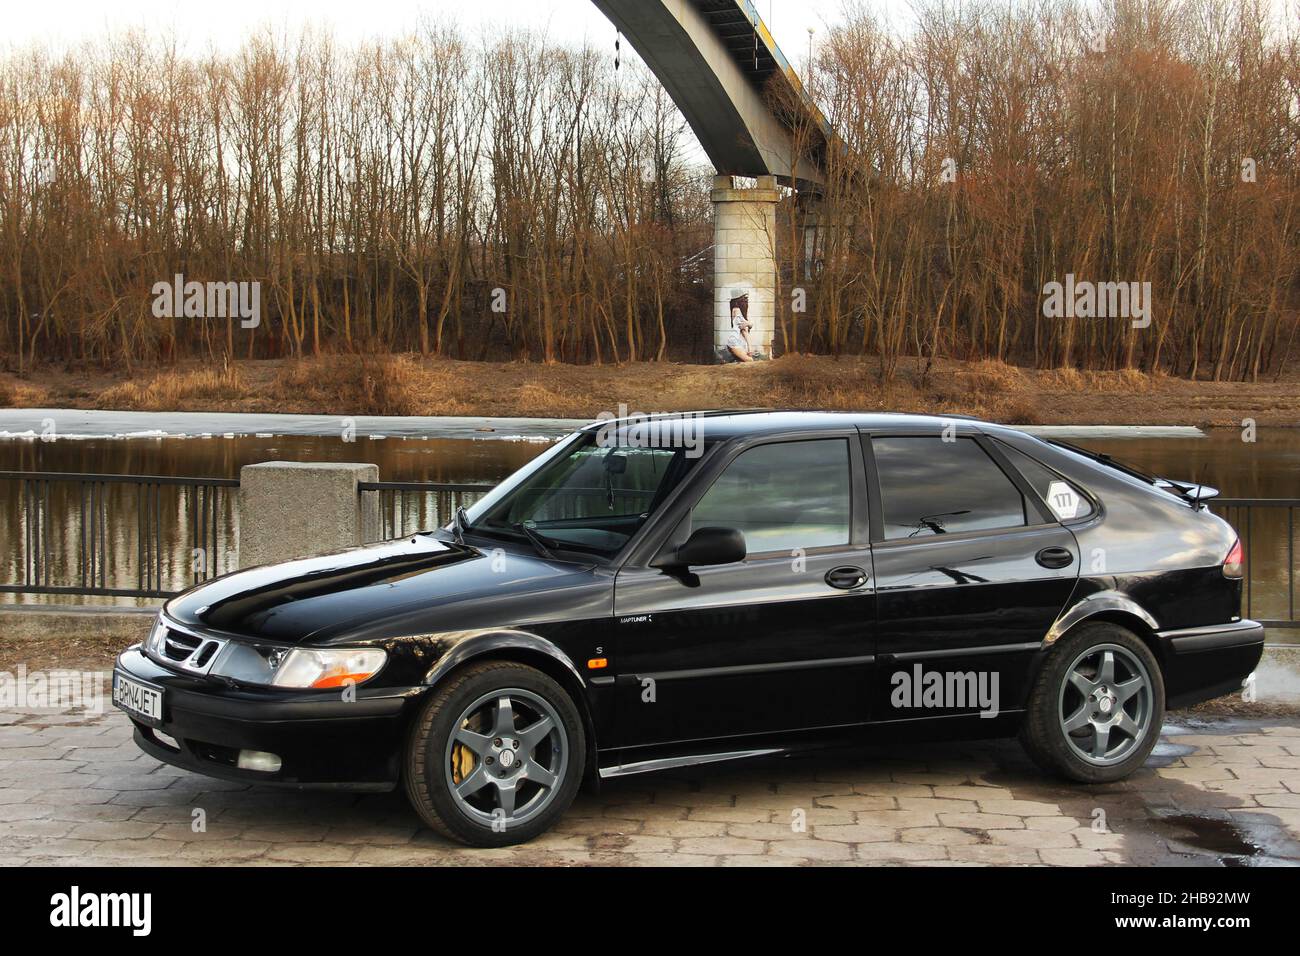 Chernihiv, Ukraine - March 20, 2021: Old Swedish car Saab 900 Turbo on the background of the bridge Stock Photo